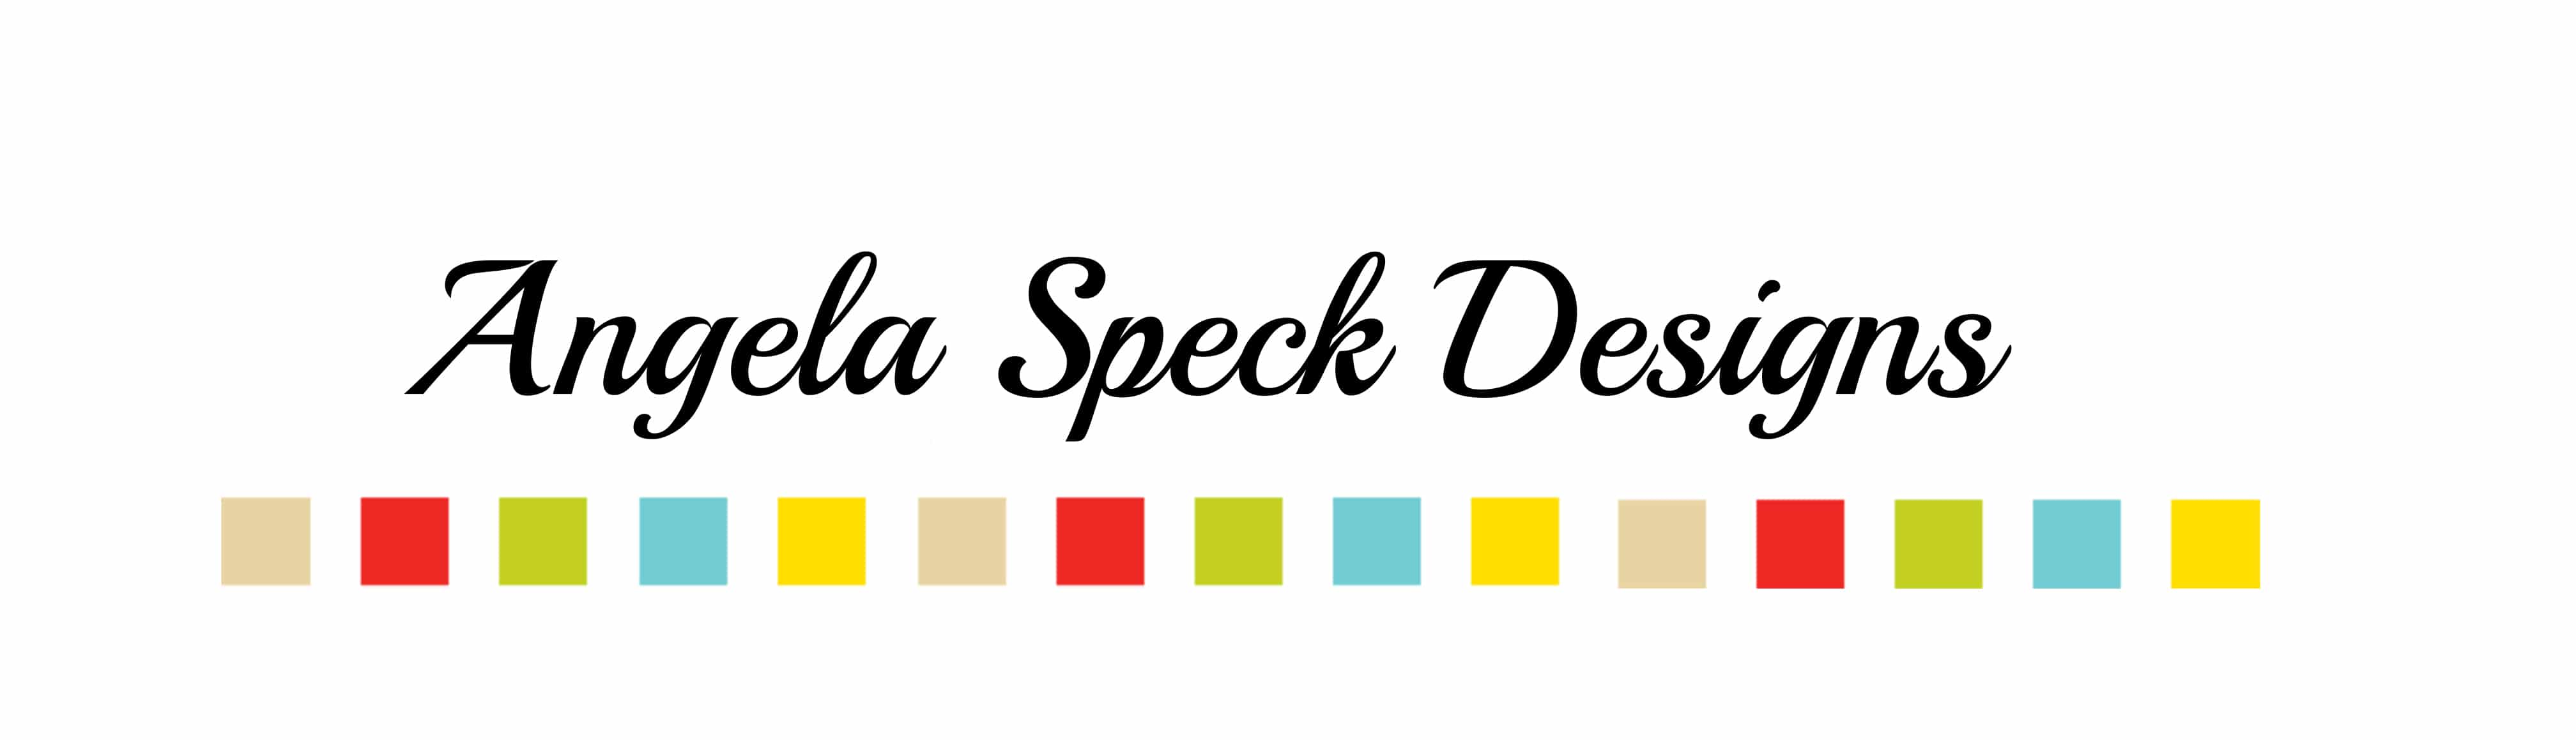 Speck Logo - Angela Speck LOGO COLOR AMS DESIGNS Color lg-1 - Vero Beach Wine ...